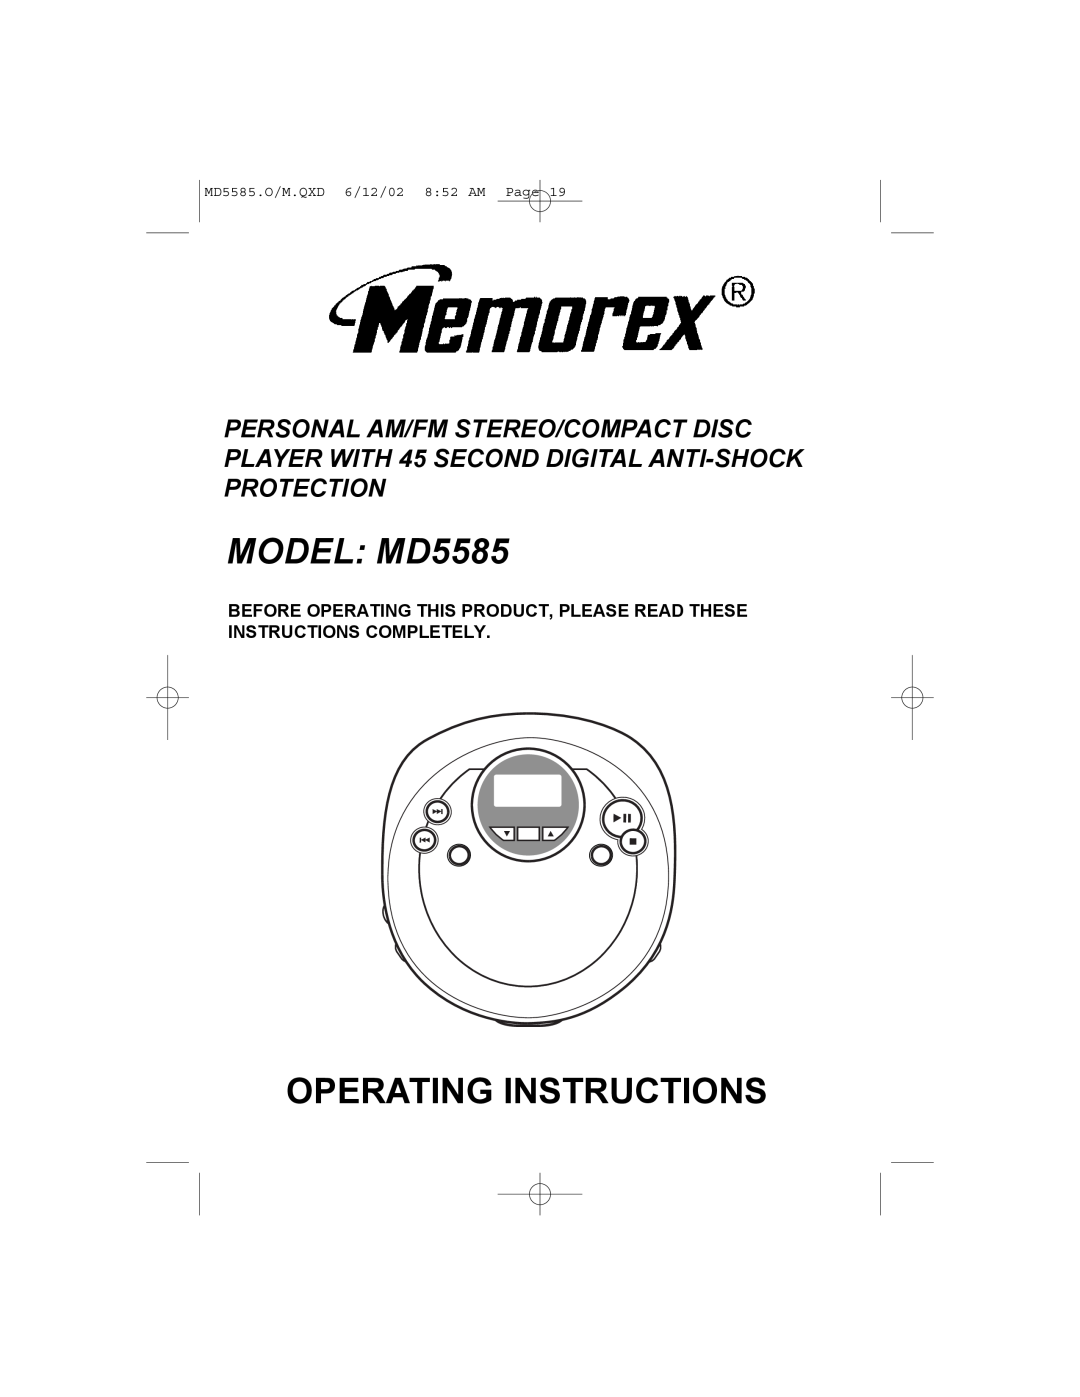 Memorex operating instructions MODEL MD5585, Operating Instructions, MD5585.O/M.QXD 6/12/02 8 52 AM Page 